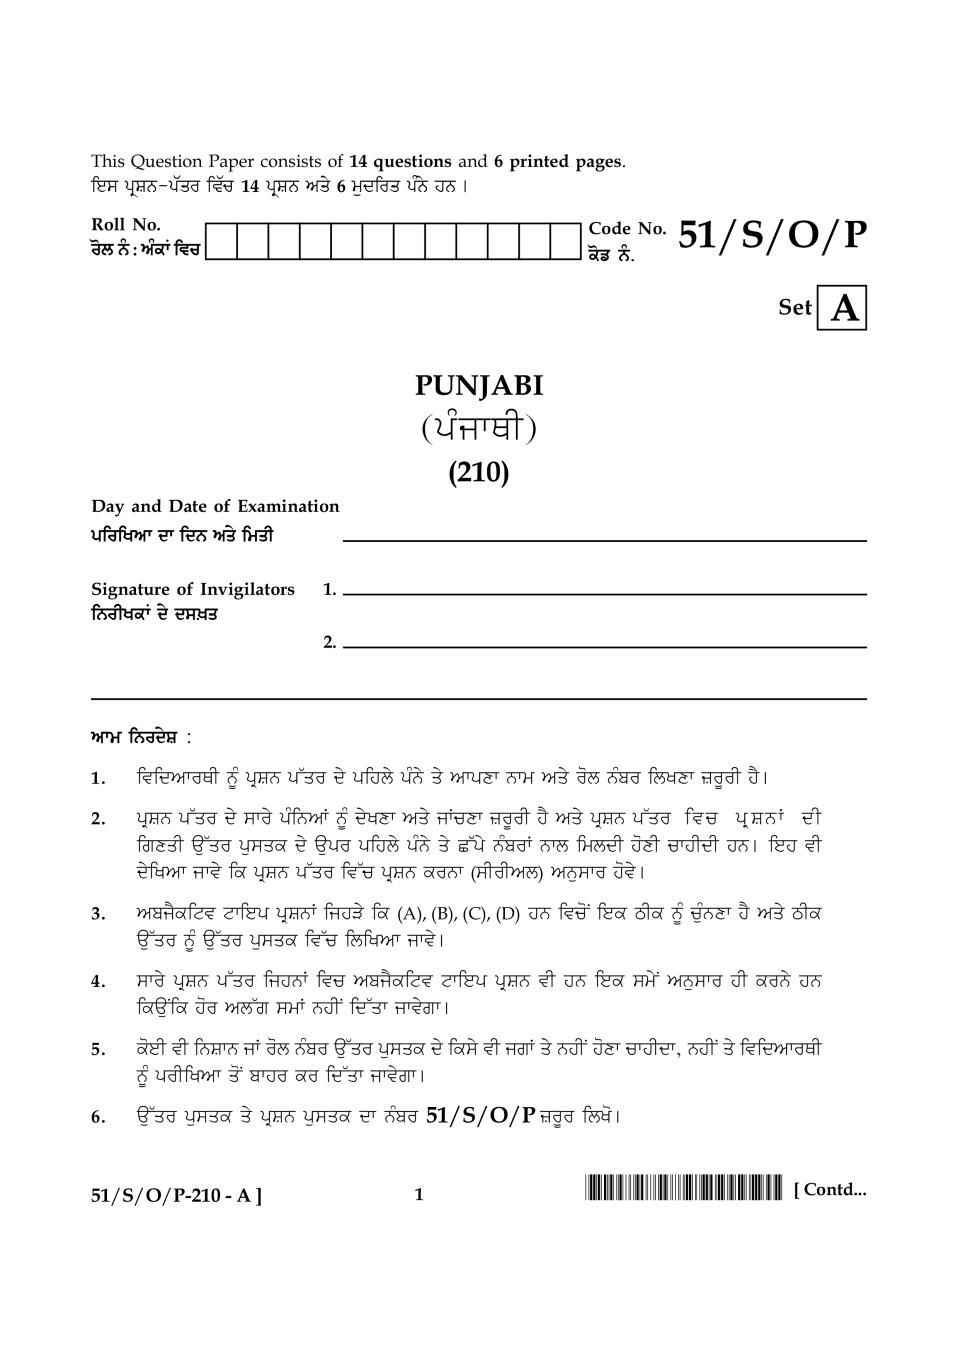 NIOS Class 10 Question Paper Oct 2015 - Punjabi - Page 1